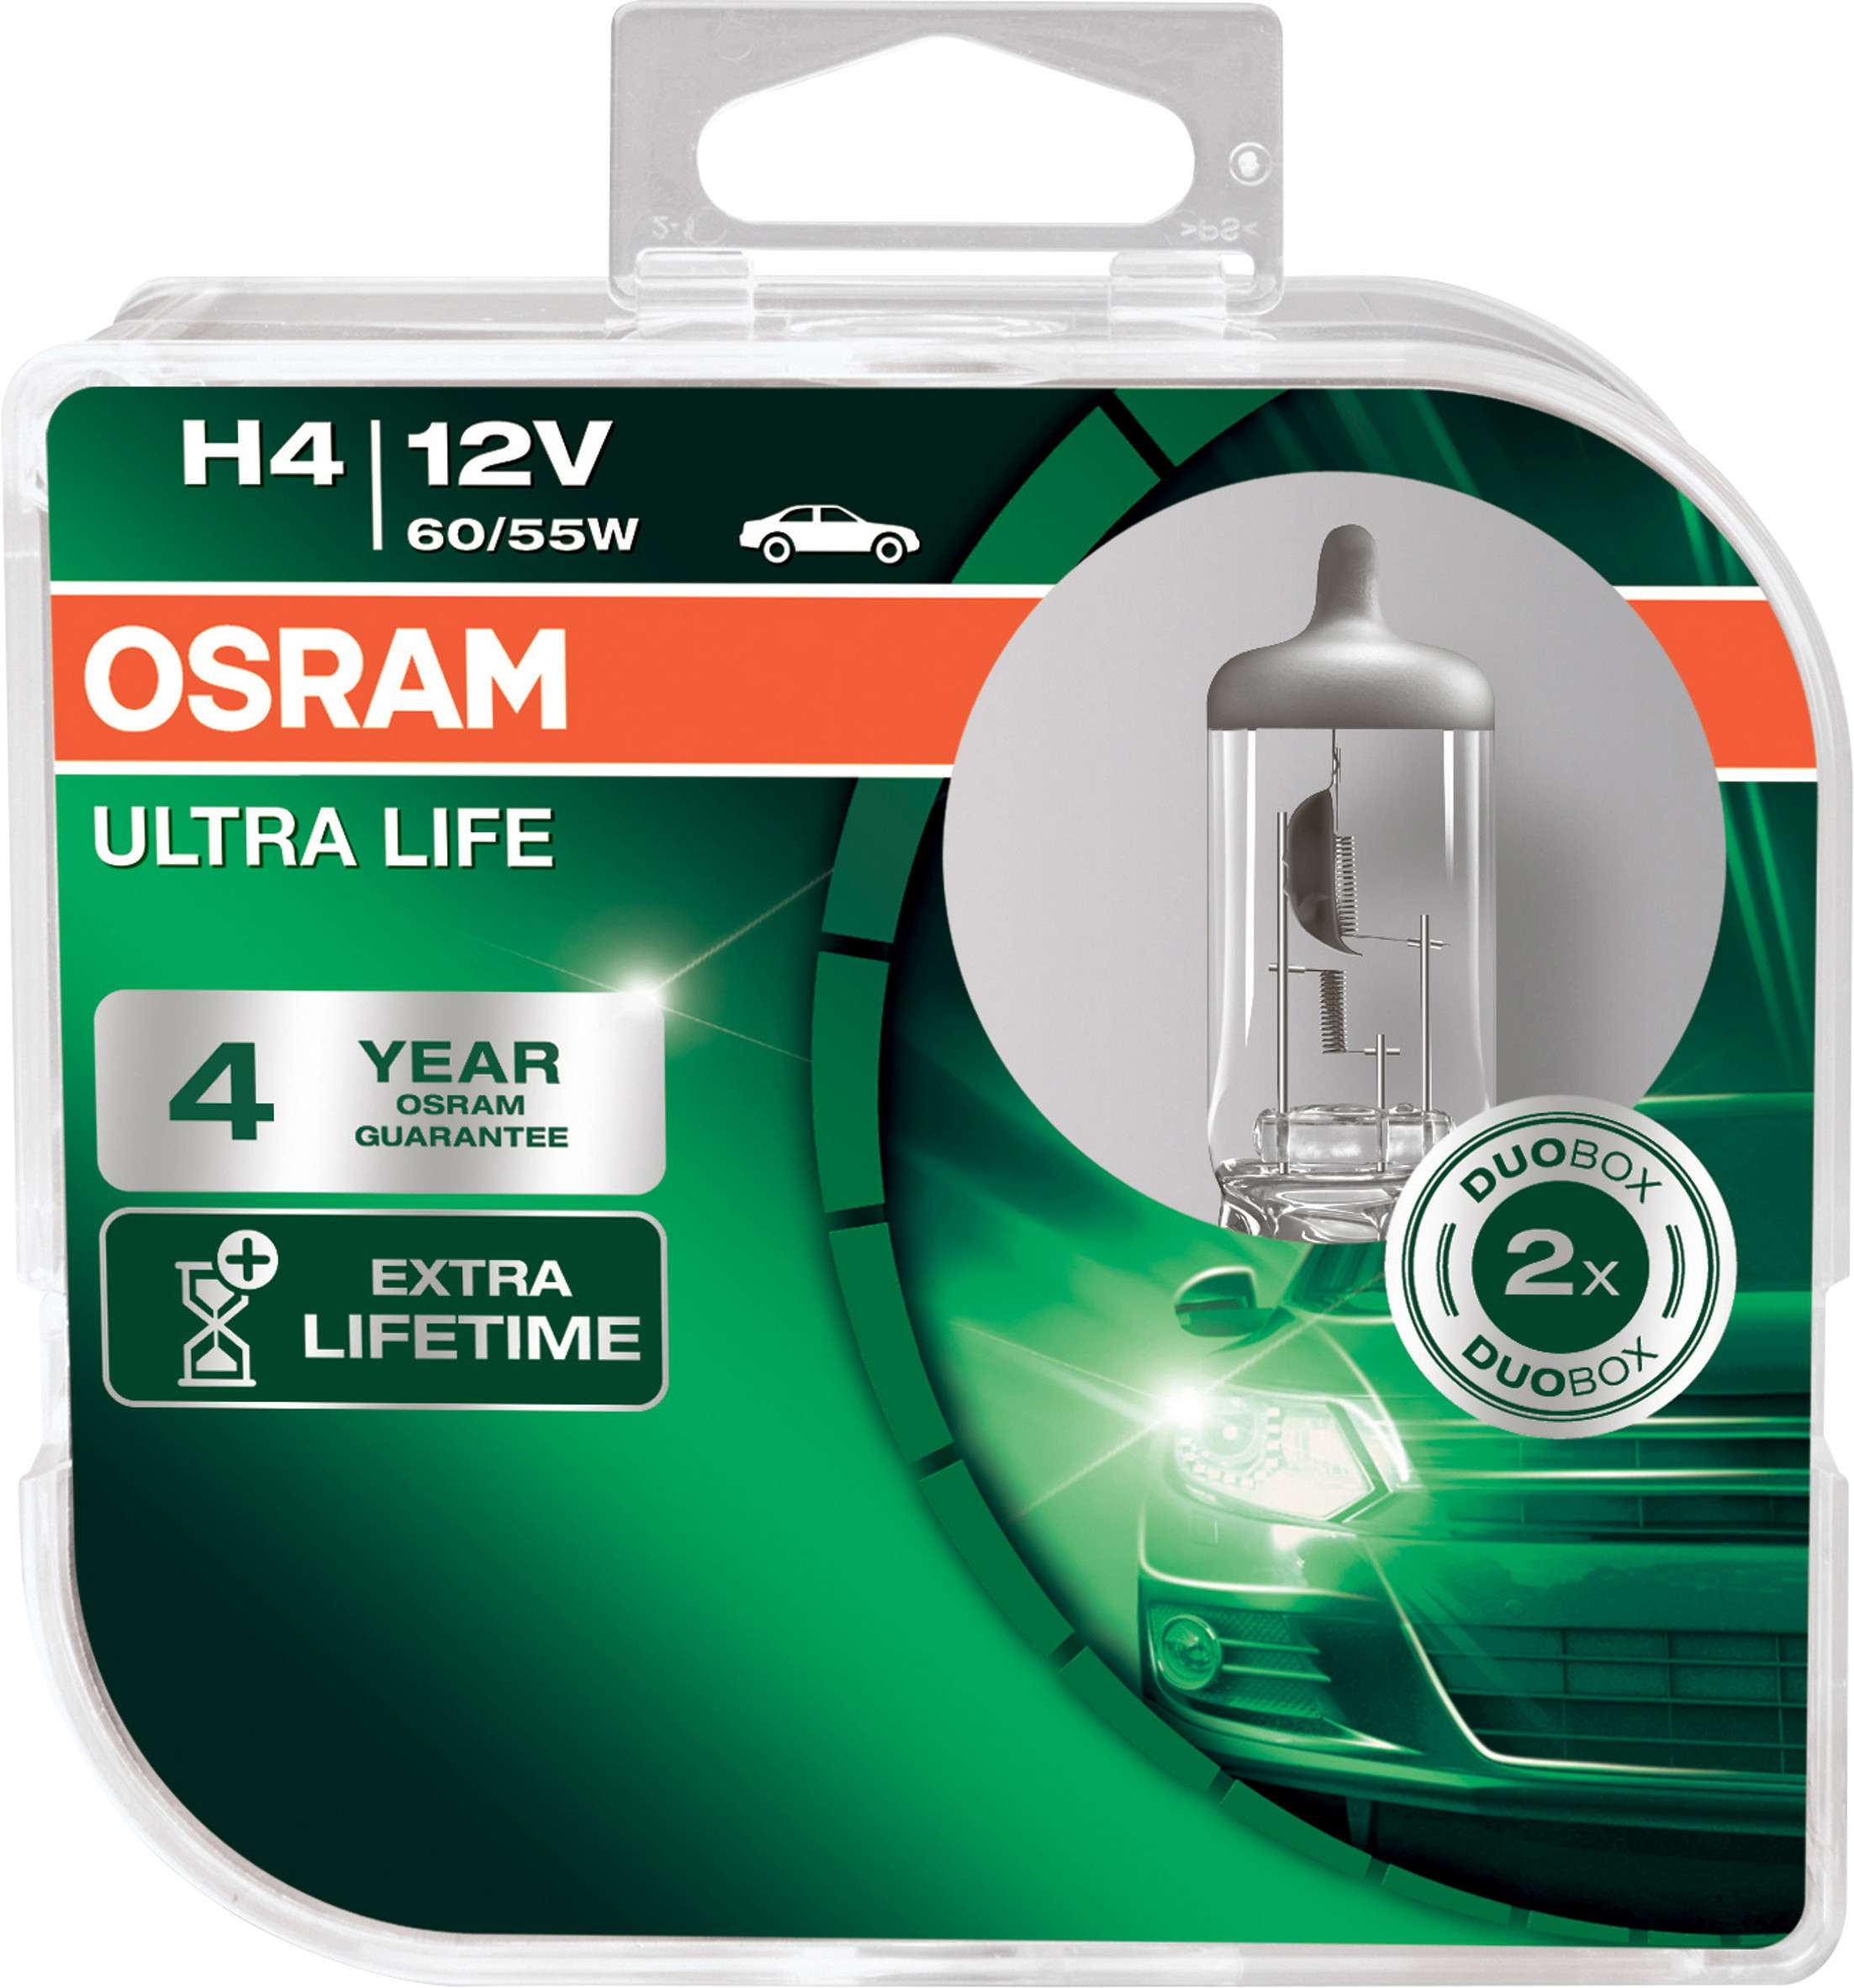 Lampade OSRAM H4 ULTRA LIFE 12V 55W Duo Box